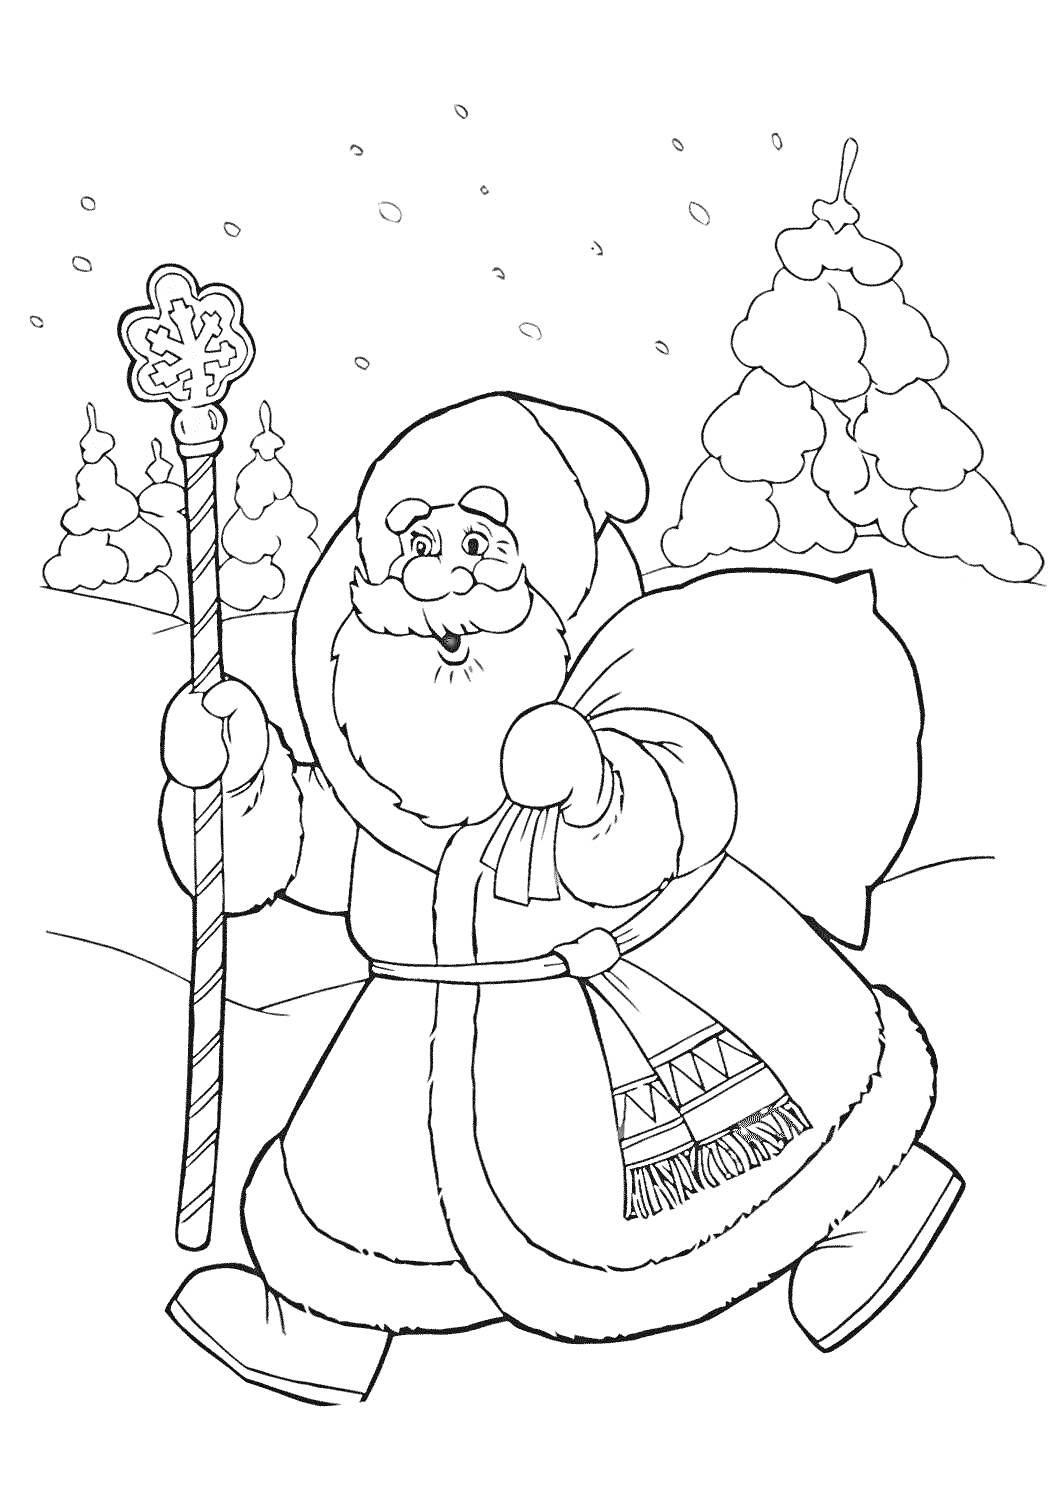 Раскраска Мороз Иванович с посохом на фоне леса и снега